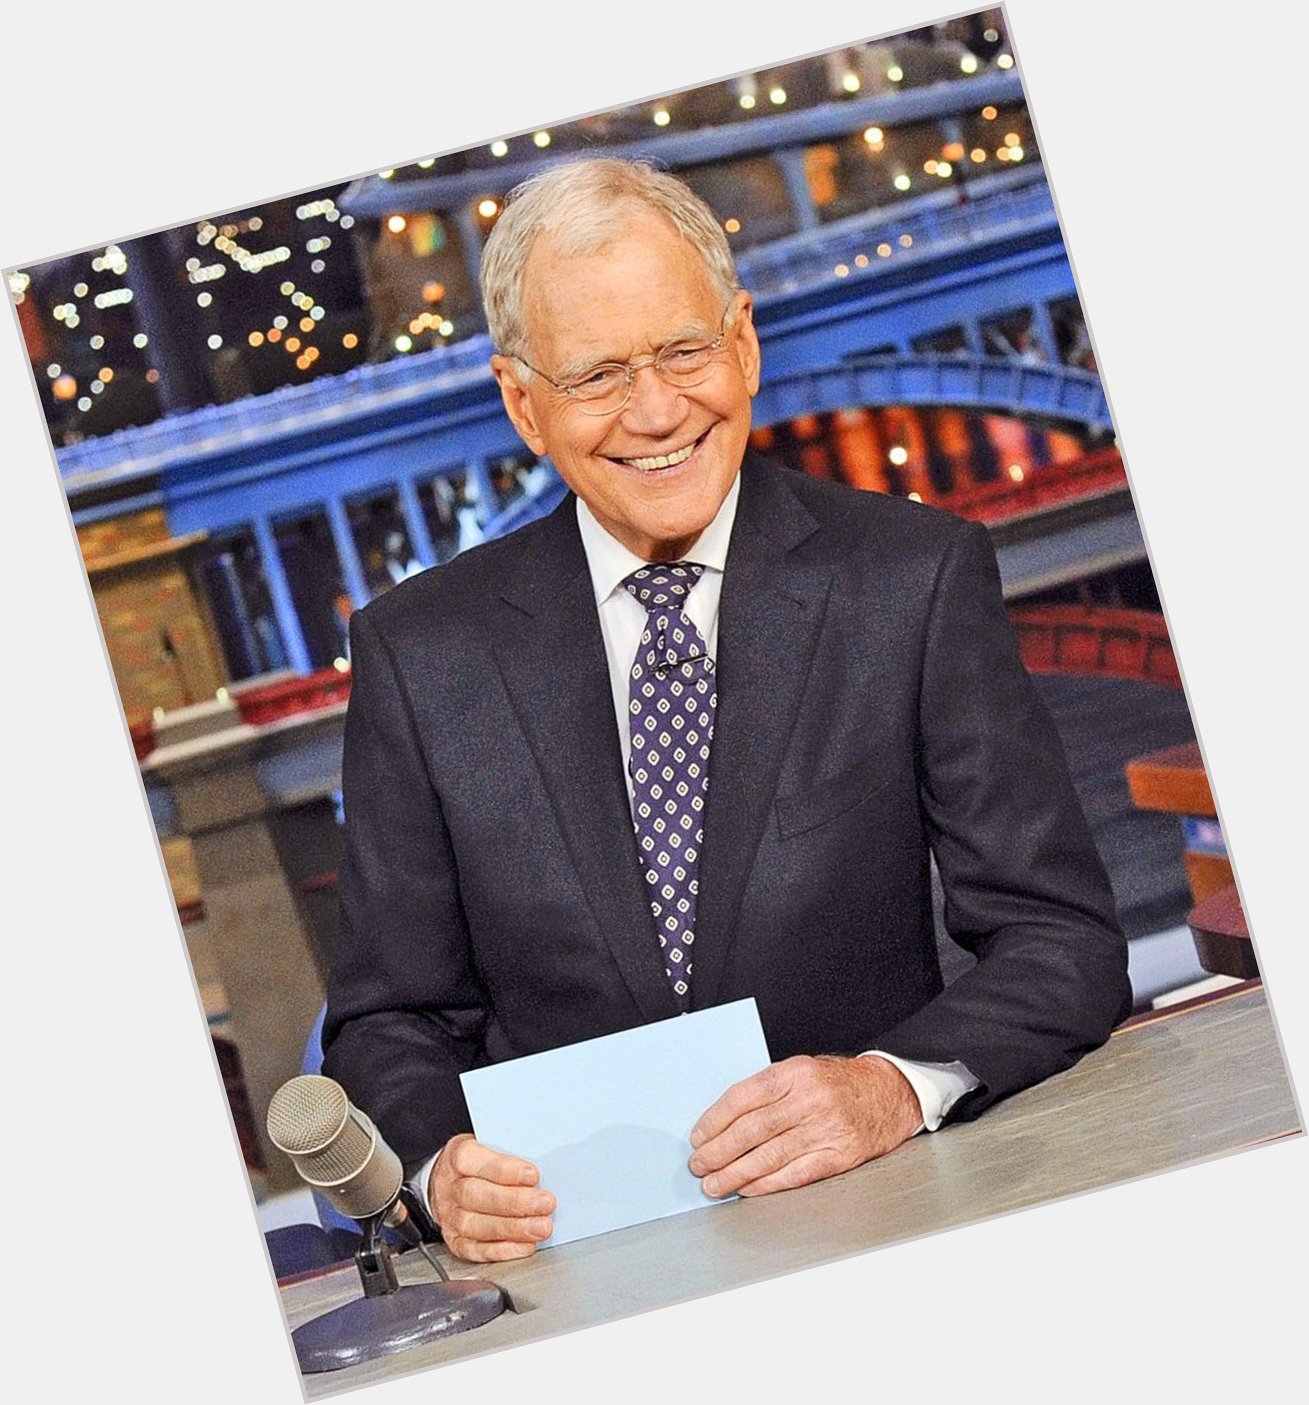 Happy birthday to a true genius, David Letterman! 